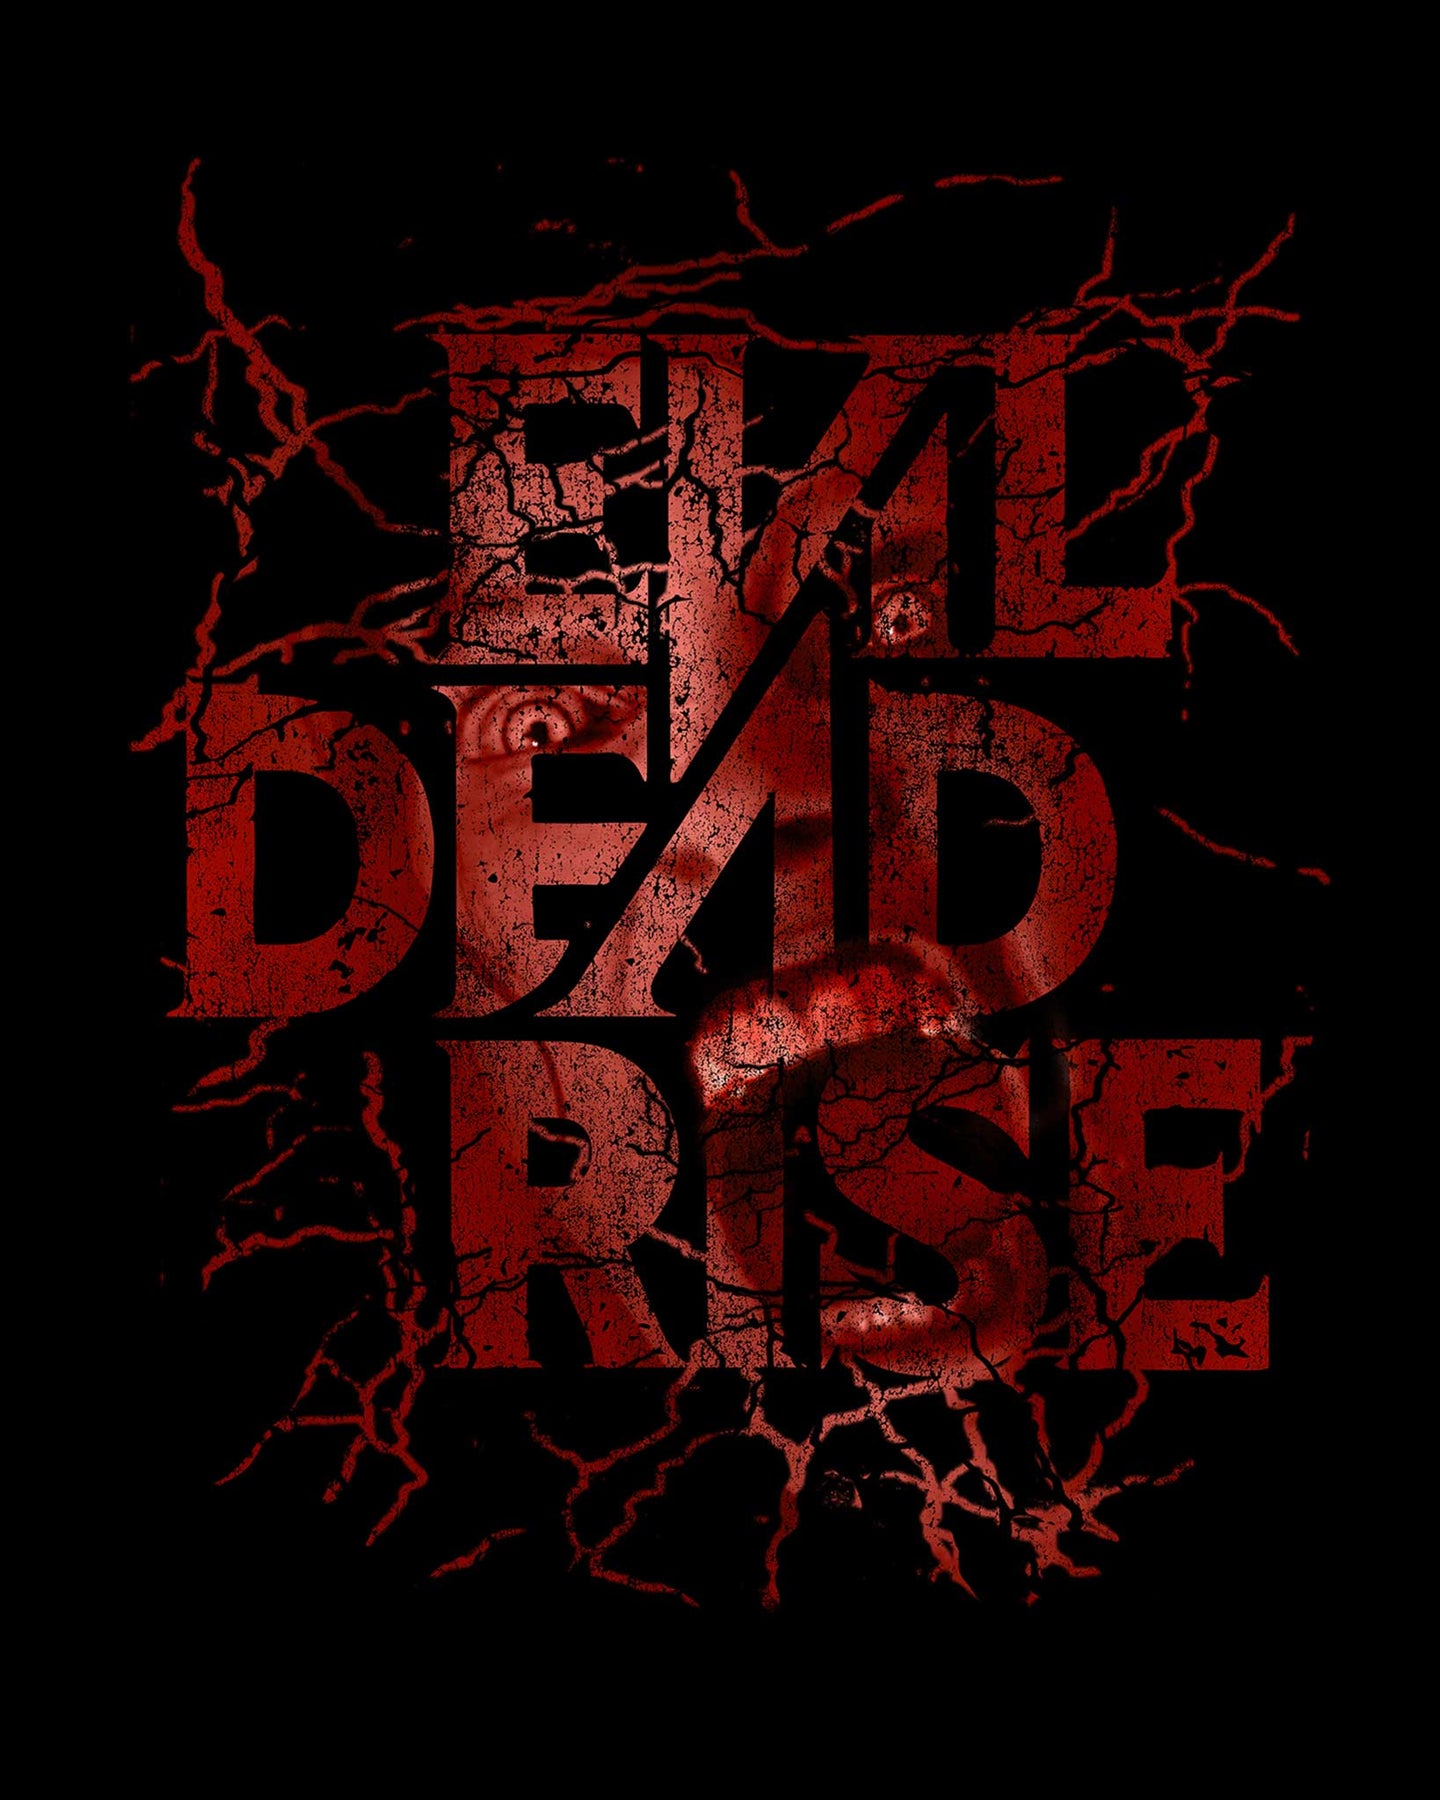 Evil Dead Rise, Logopedia